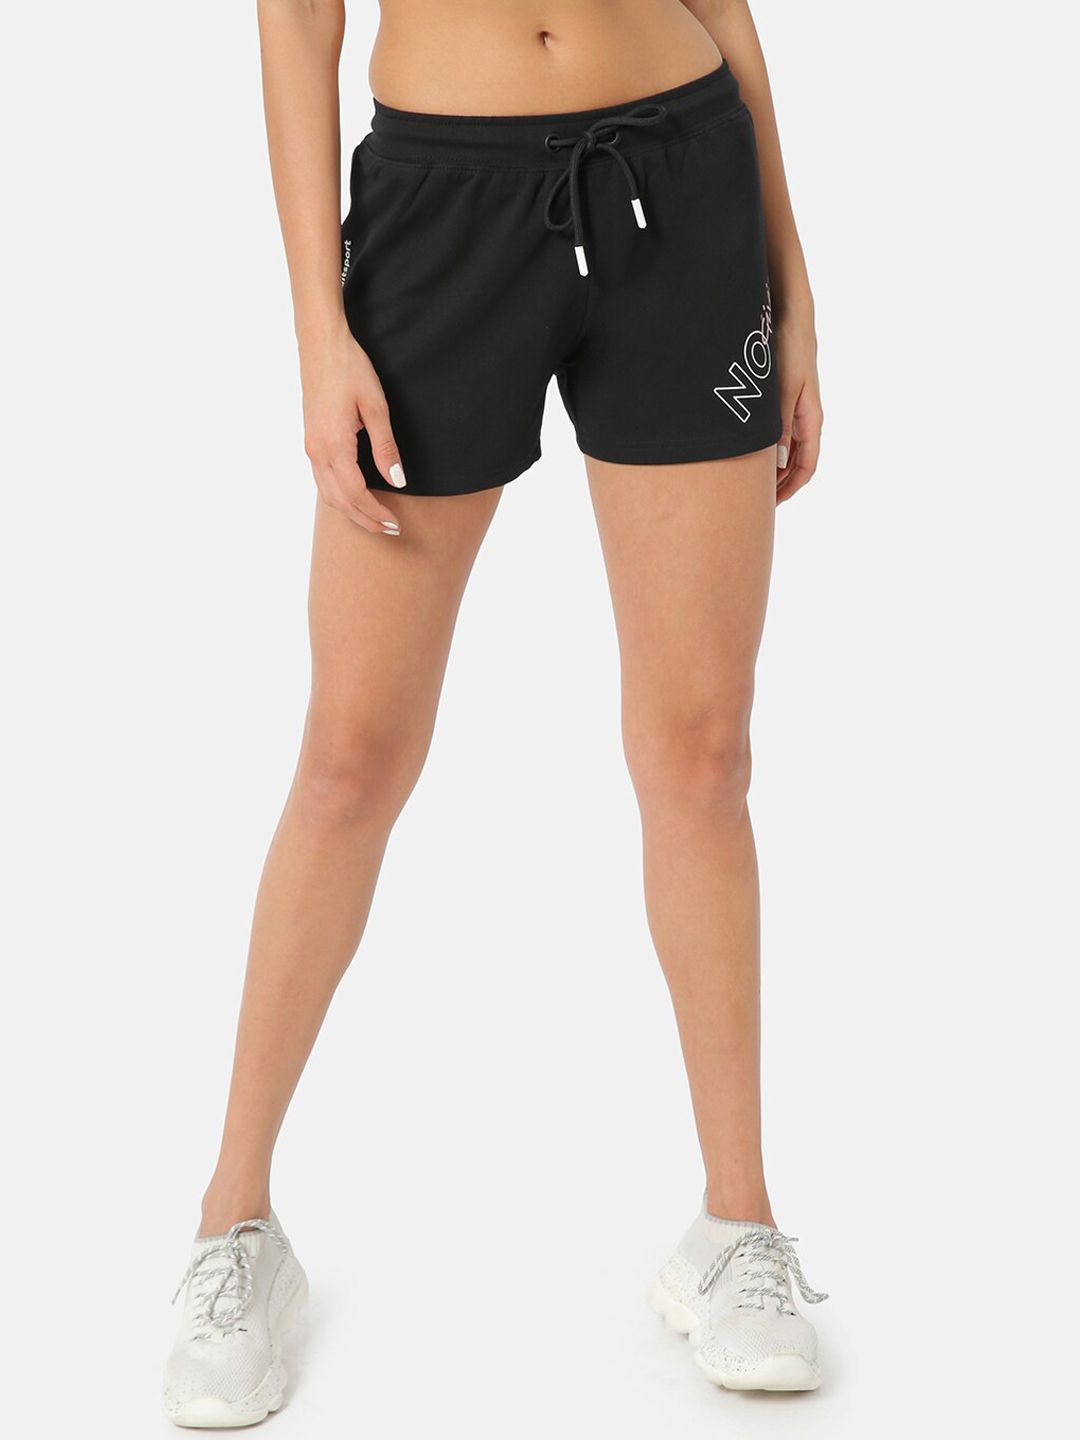 Cultsport Women Black Printed Regular Fit Regular Shorts Price in India